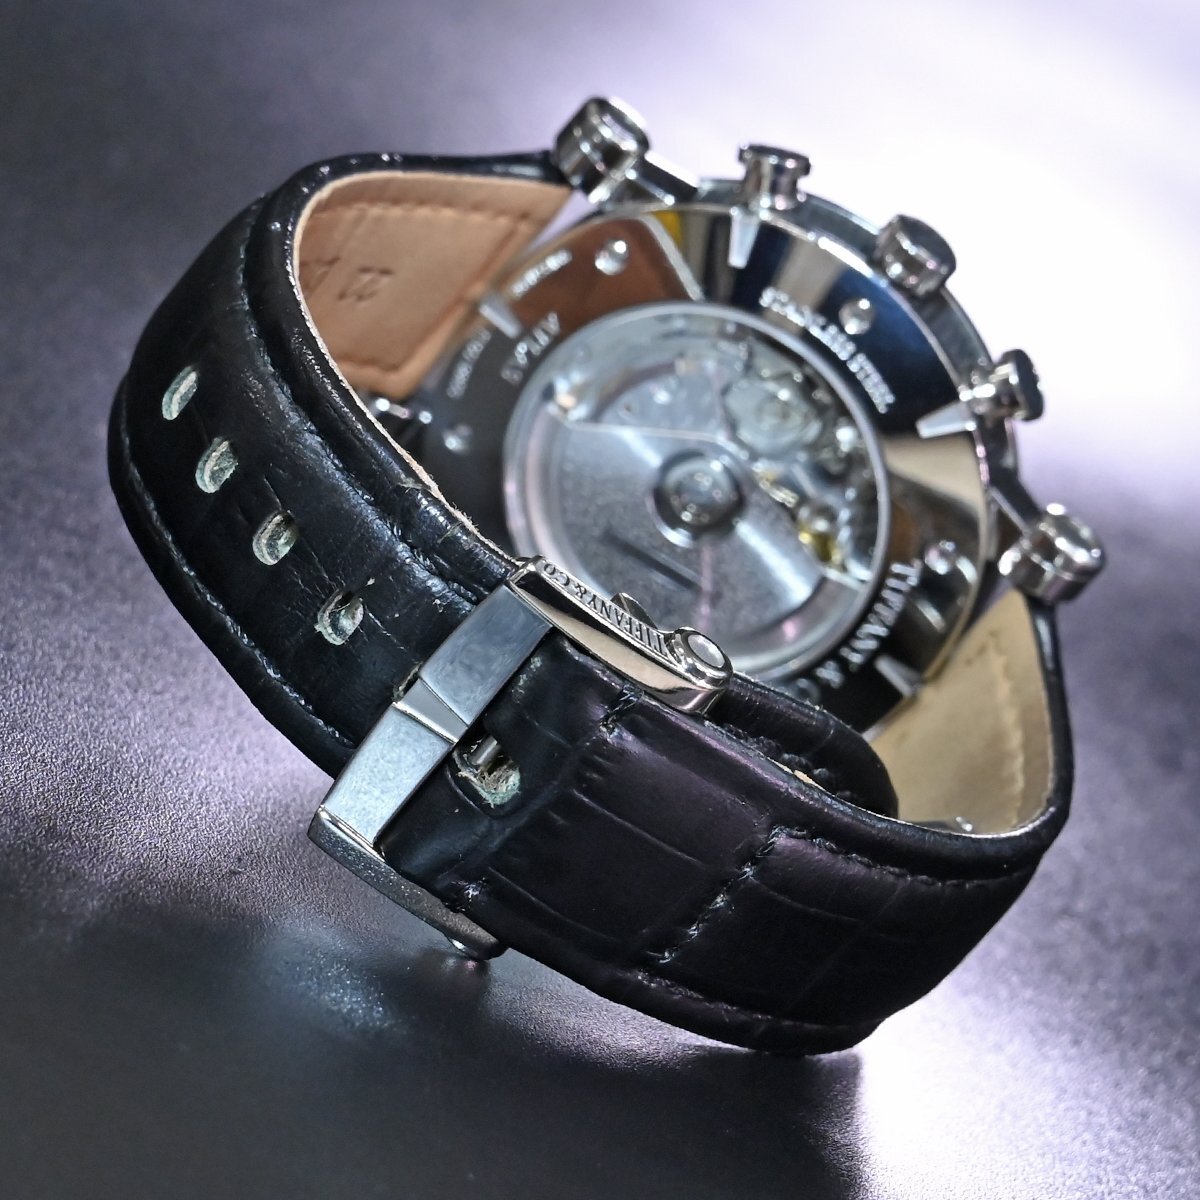  genuine article finest quality goods Tiffany new model Atlas jento chronograph men's watch for man self-winding watch wristwatch Panda face guarantee attaching TIFFANY&Co.